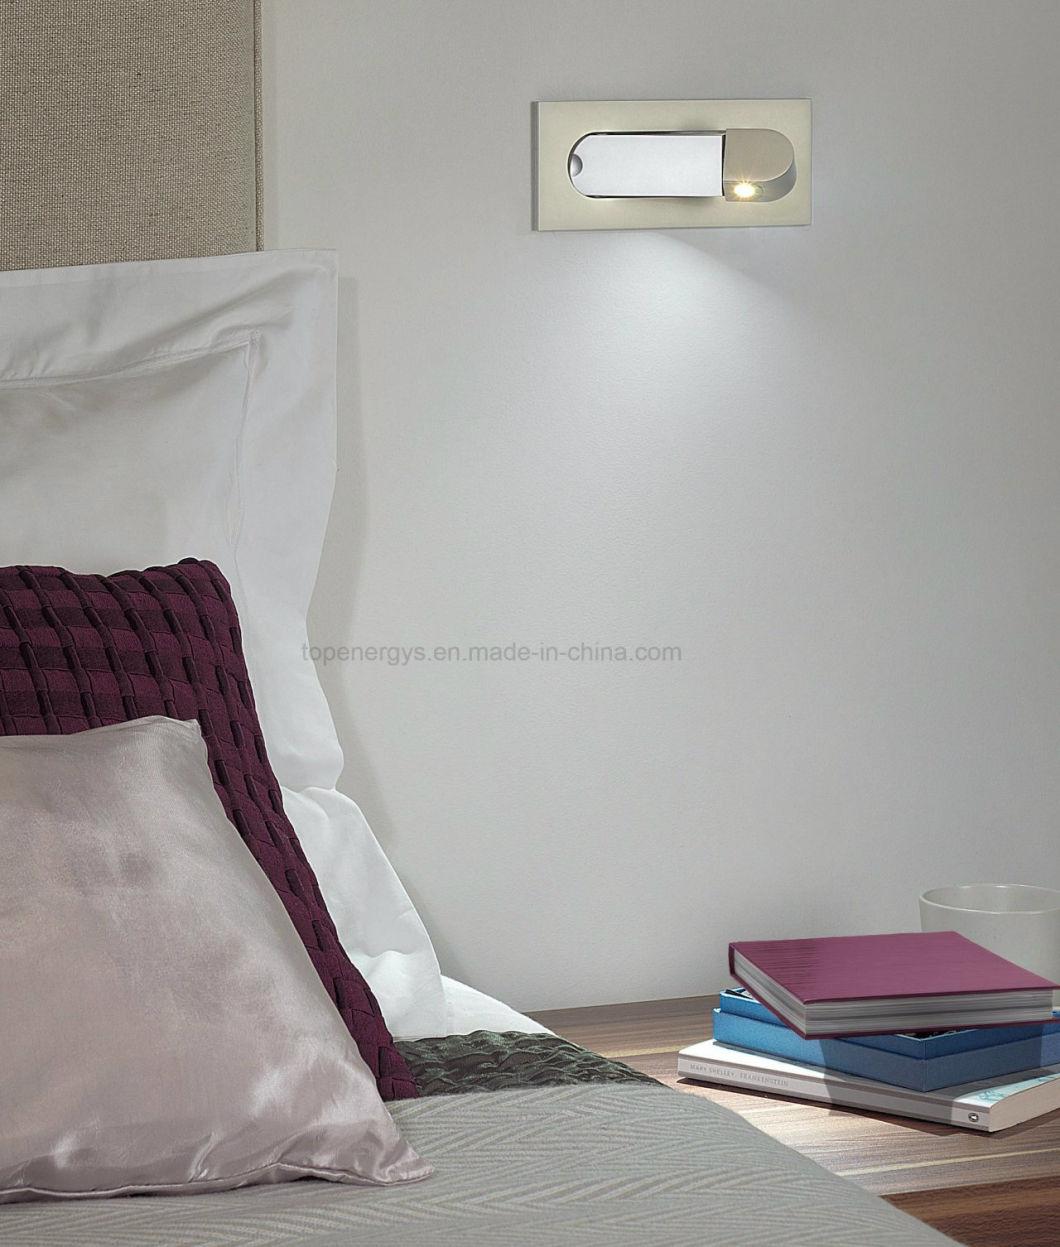 Rotatable LED Wall Lamp Bh-002 Decorative Adjustable Headboard Light Hotel Bedside Reading Light